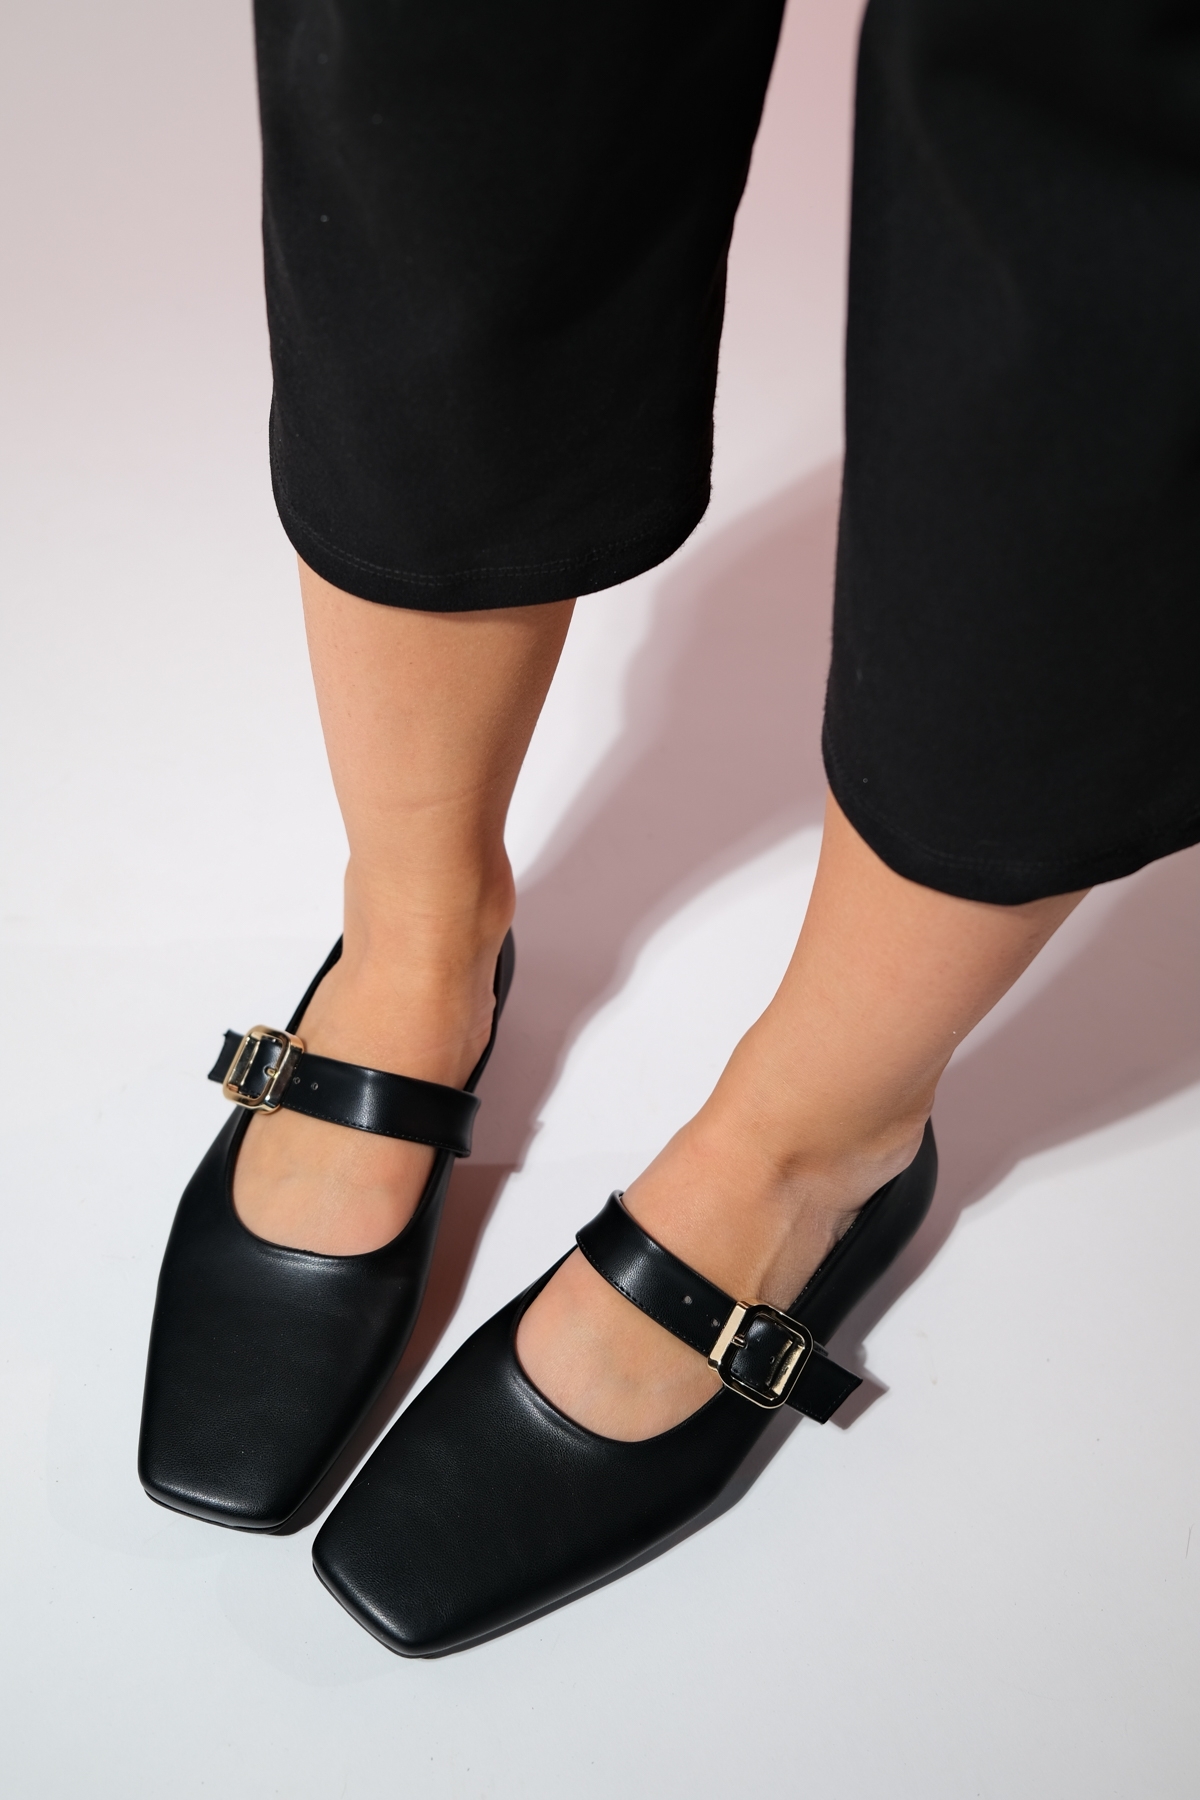 LuviShoes BLUFF Black Skin Flat Toe Women's Flat Shoes